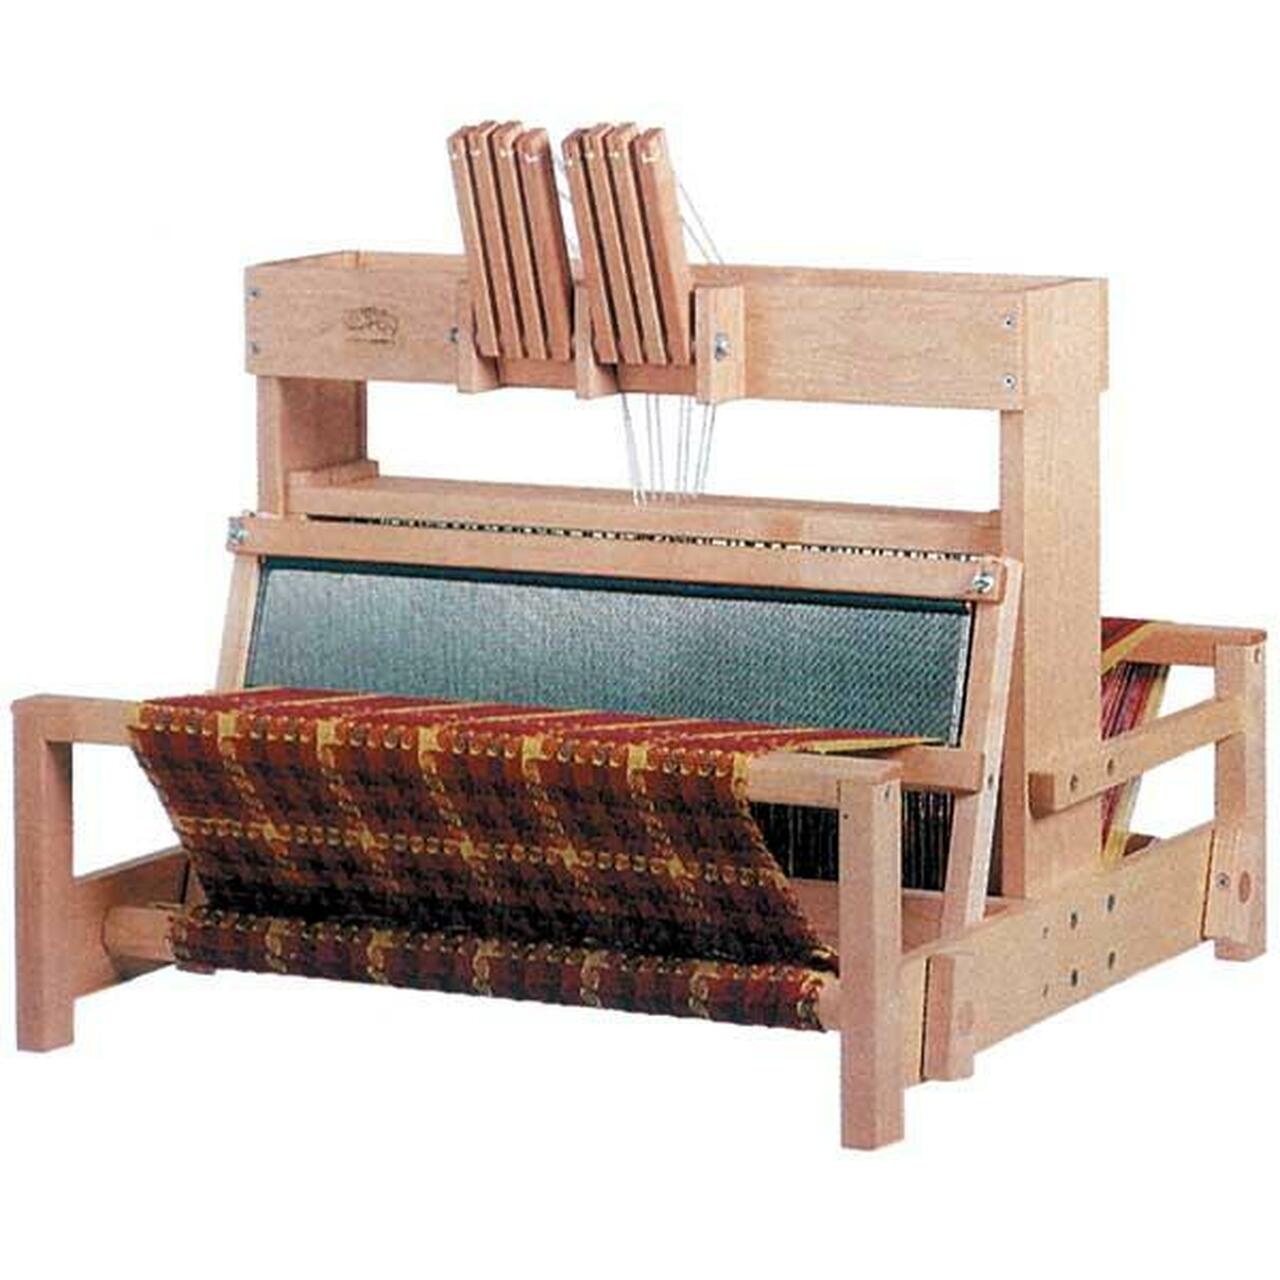 Schacht Table Loom-Table Loom-Schacht-4 Harness-Revolution Fibers